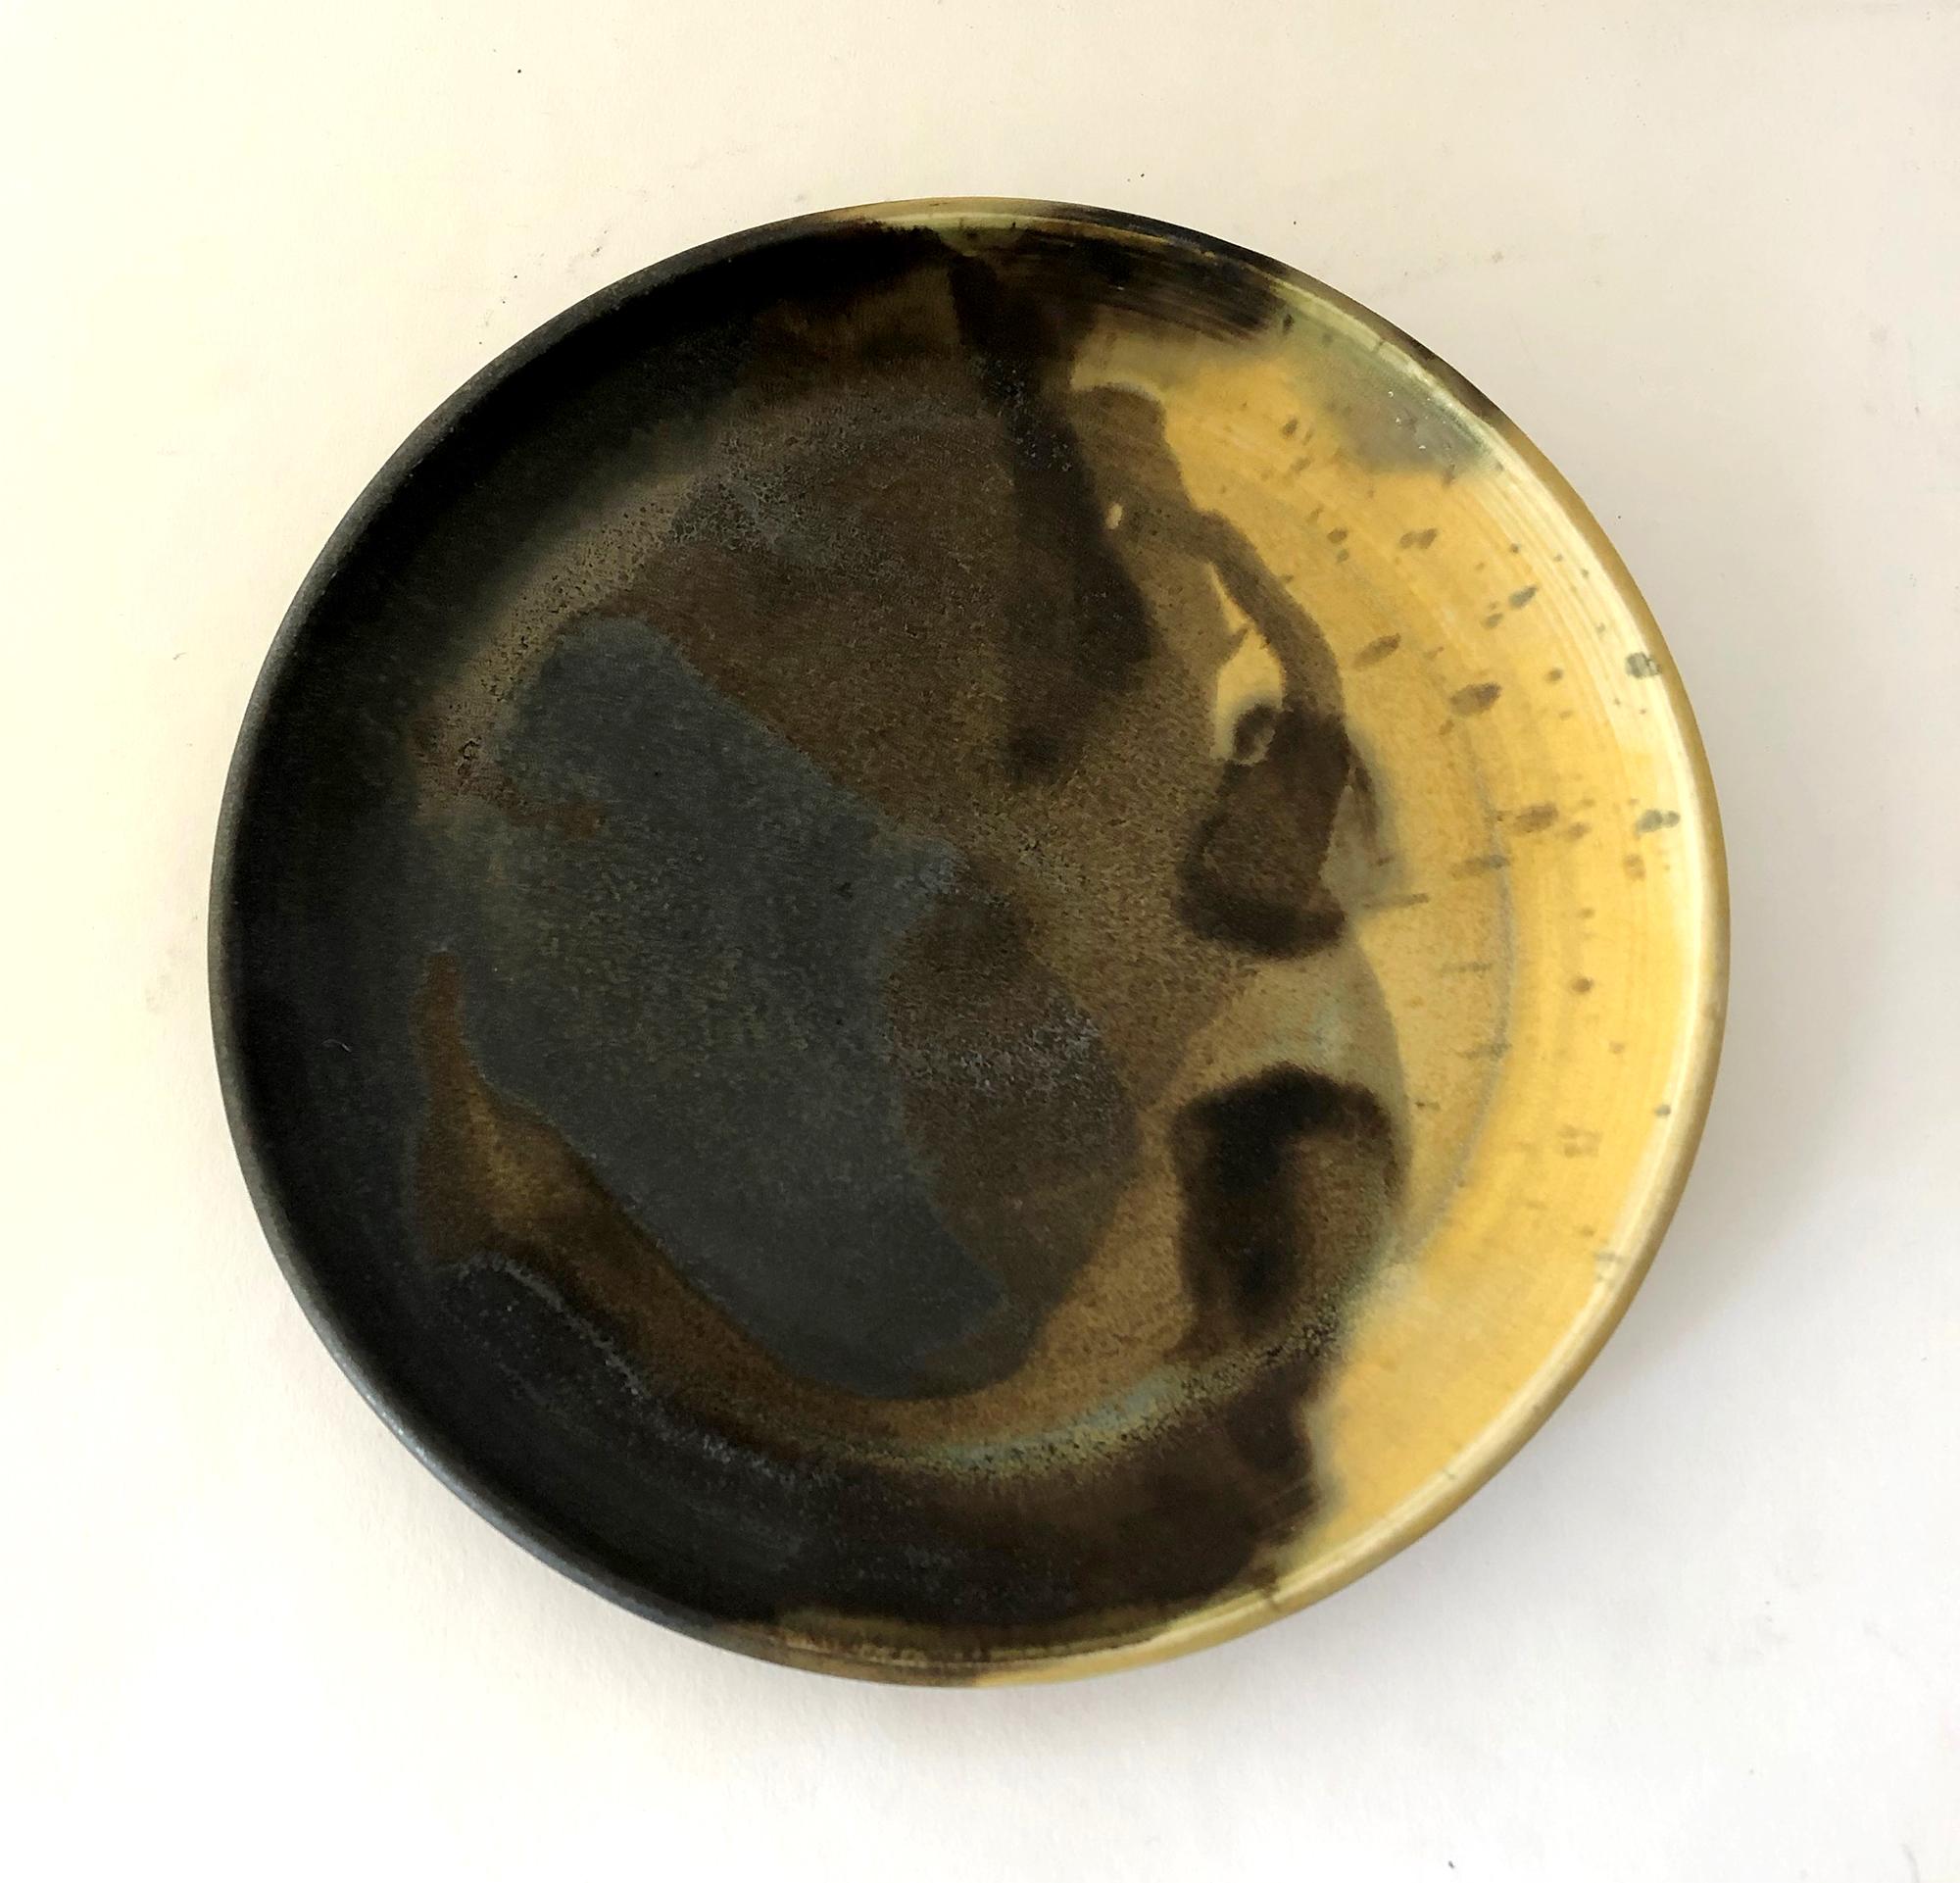 Decorative stoneware plate with abstract splash design, created by Toshiko Takaezu of Honolulu, Hawaii. Bowl measures 8.5